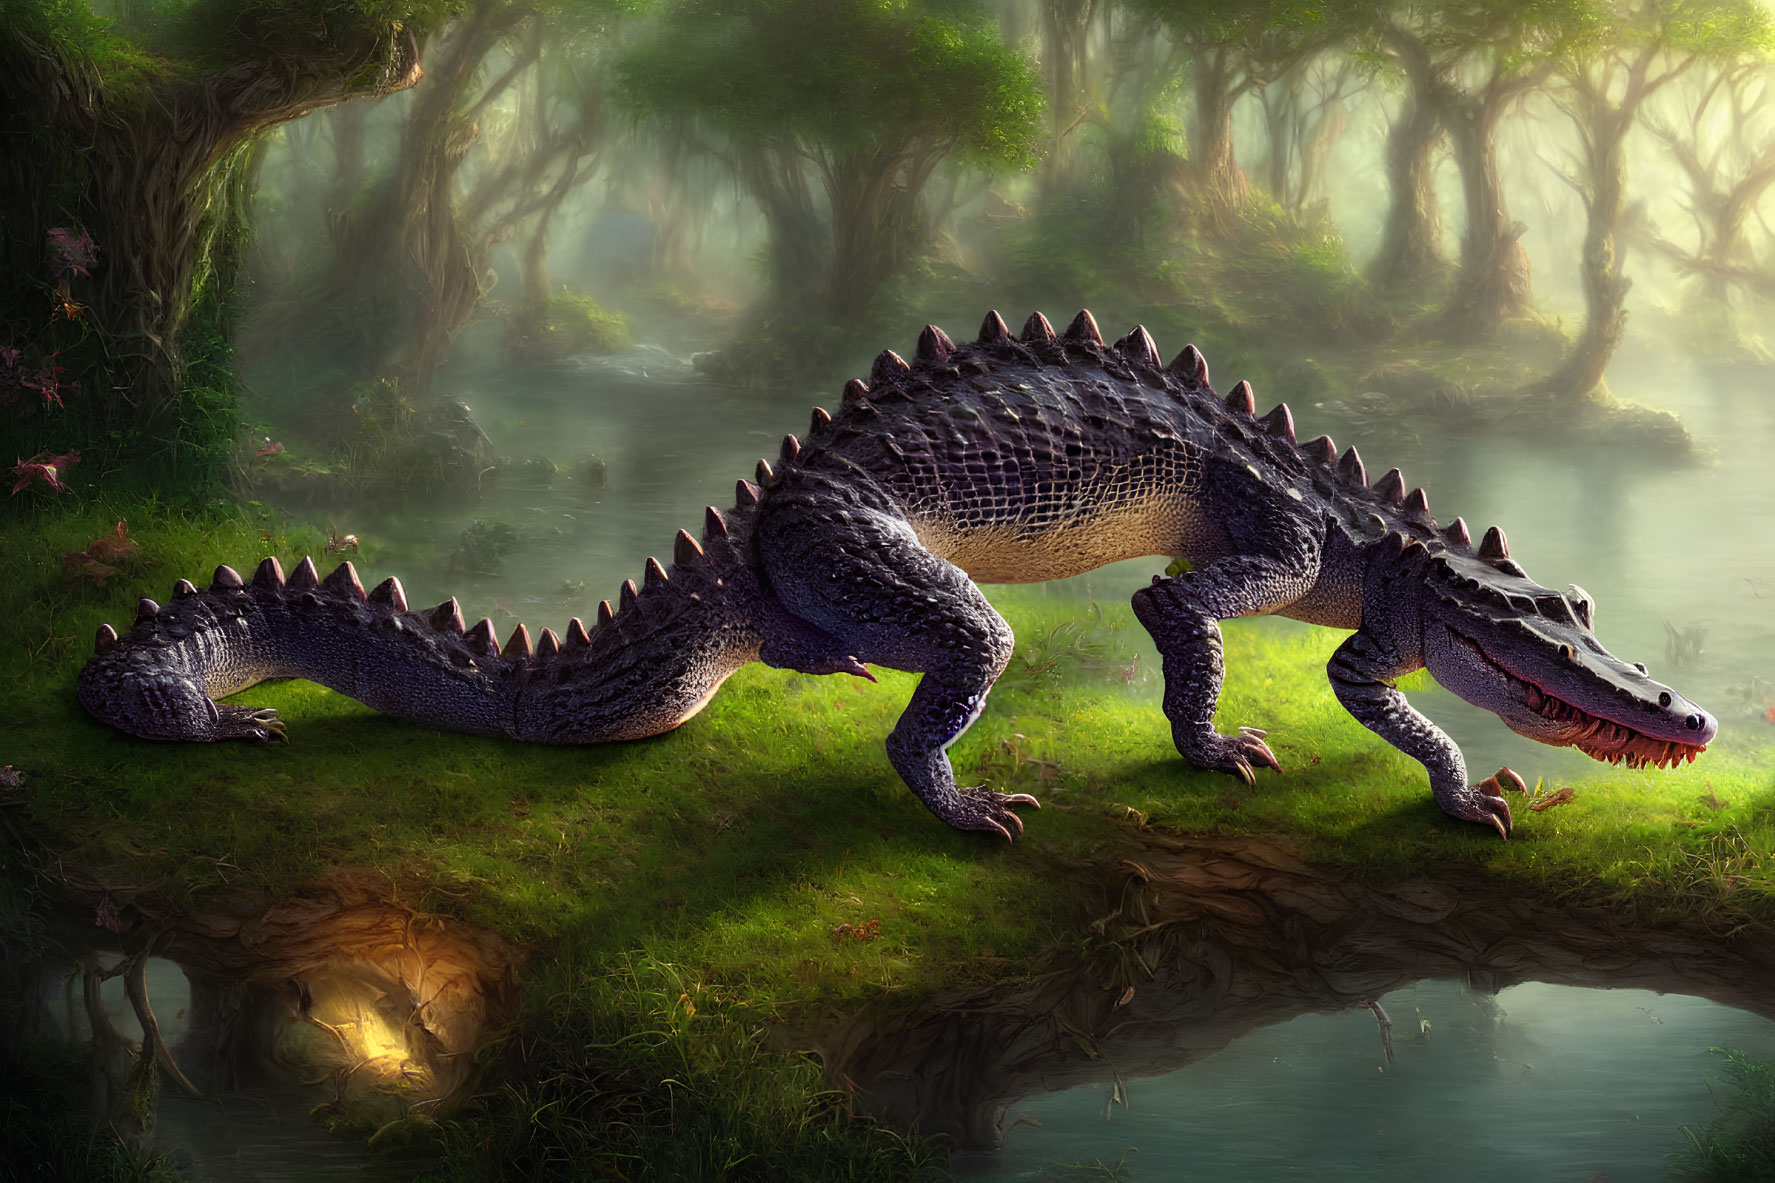 Detailed Crocodile Illustration in Lush Riverside Setting